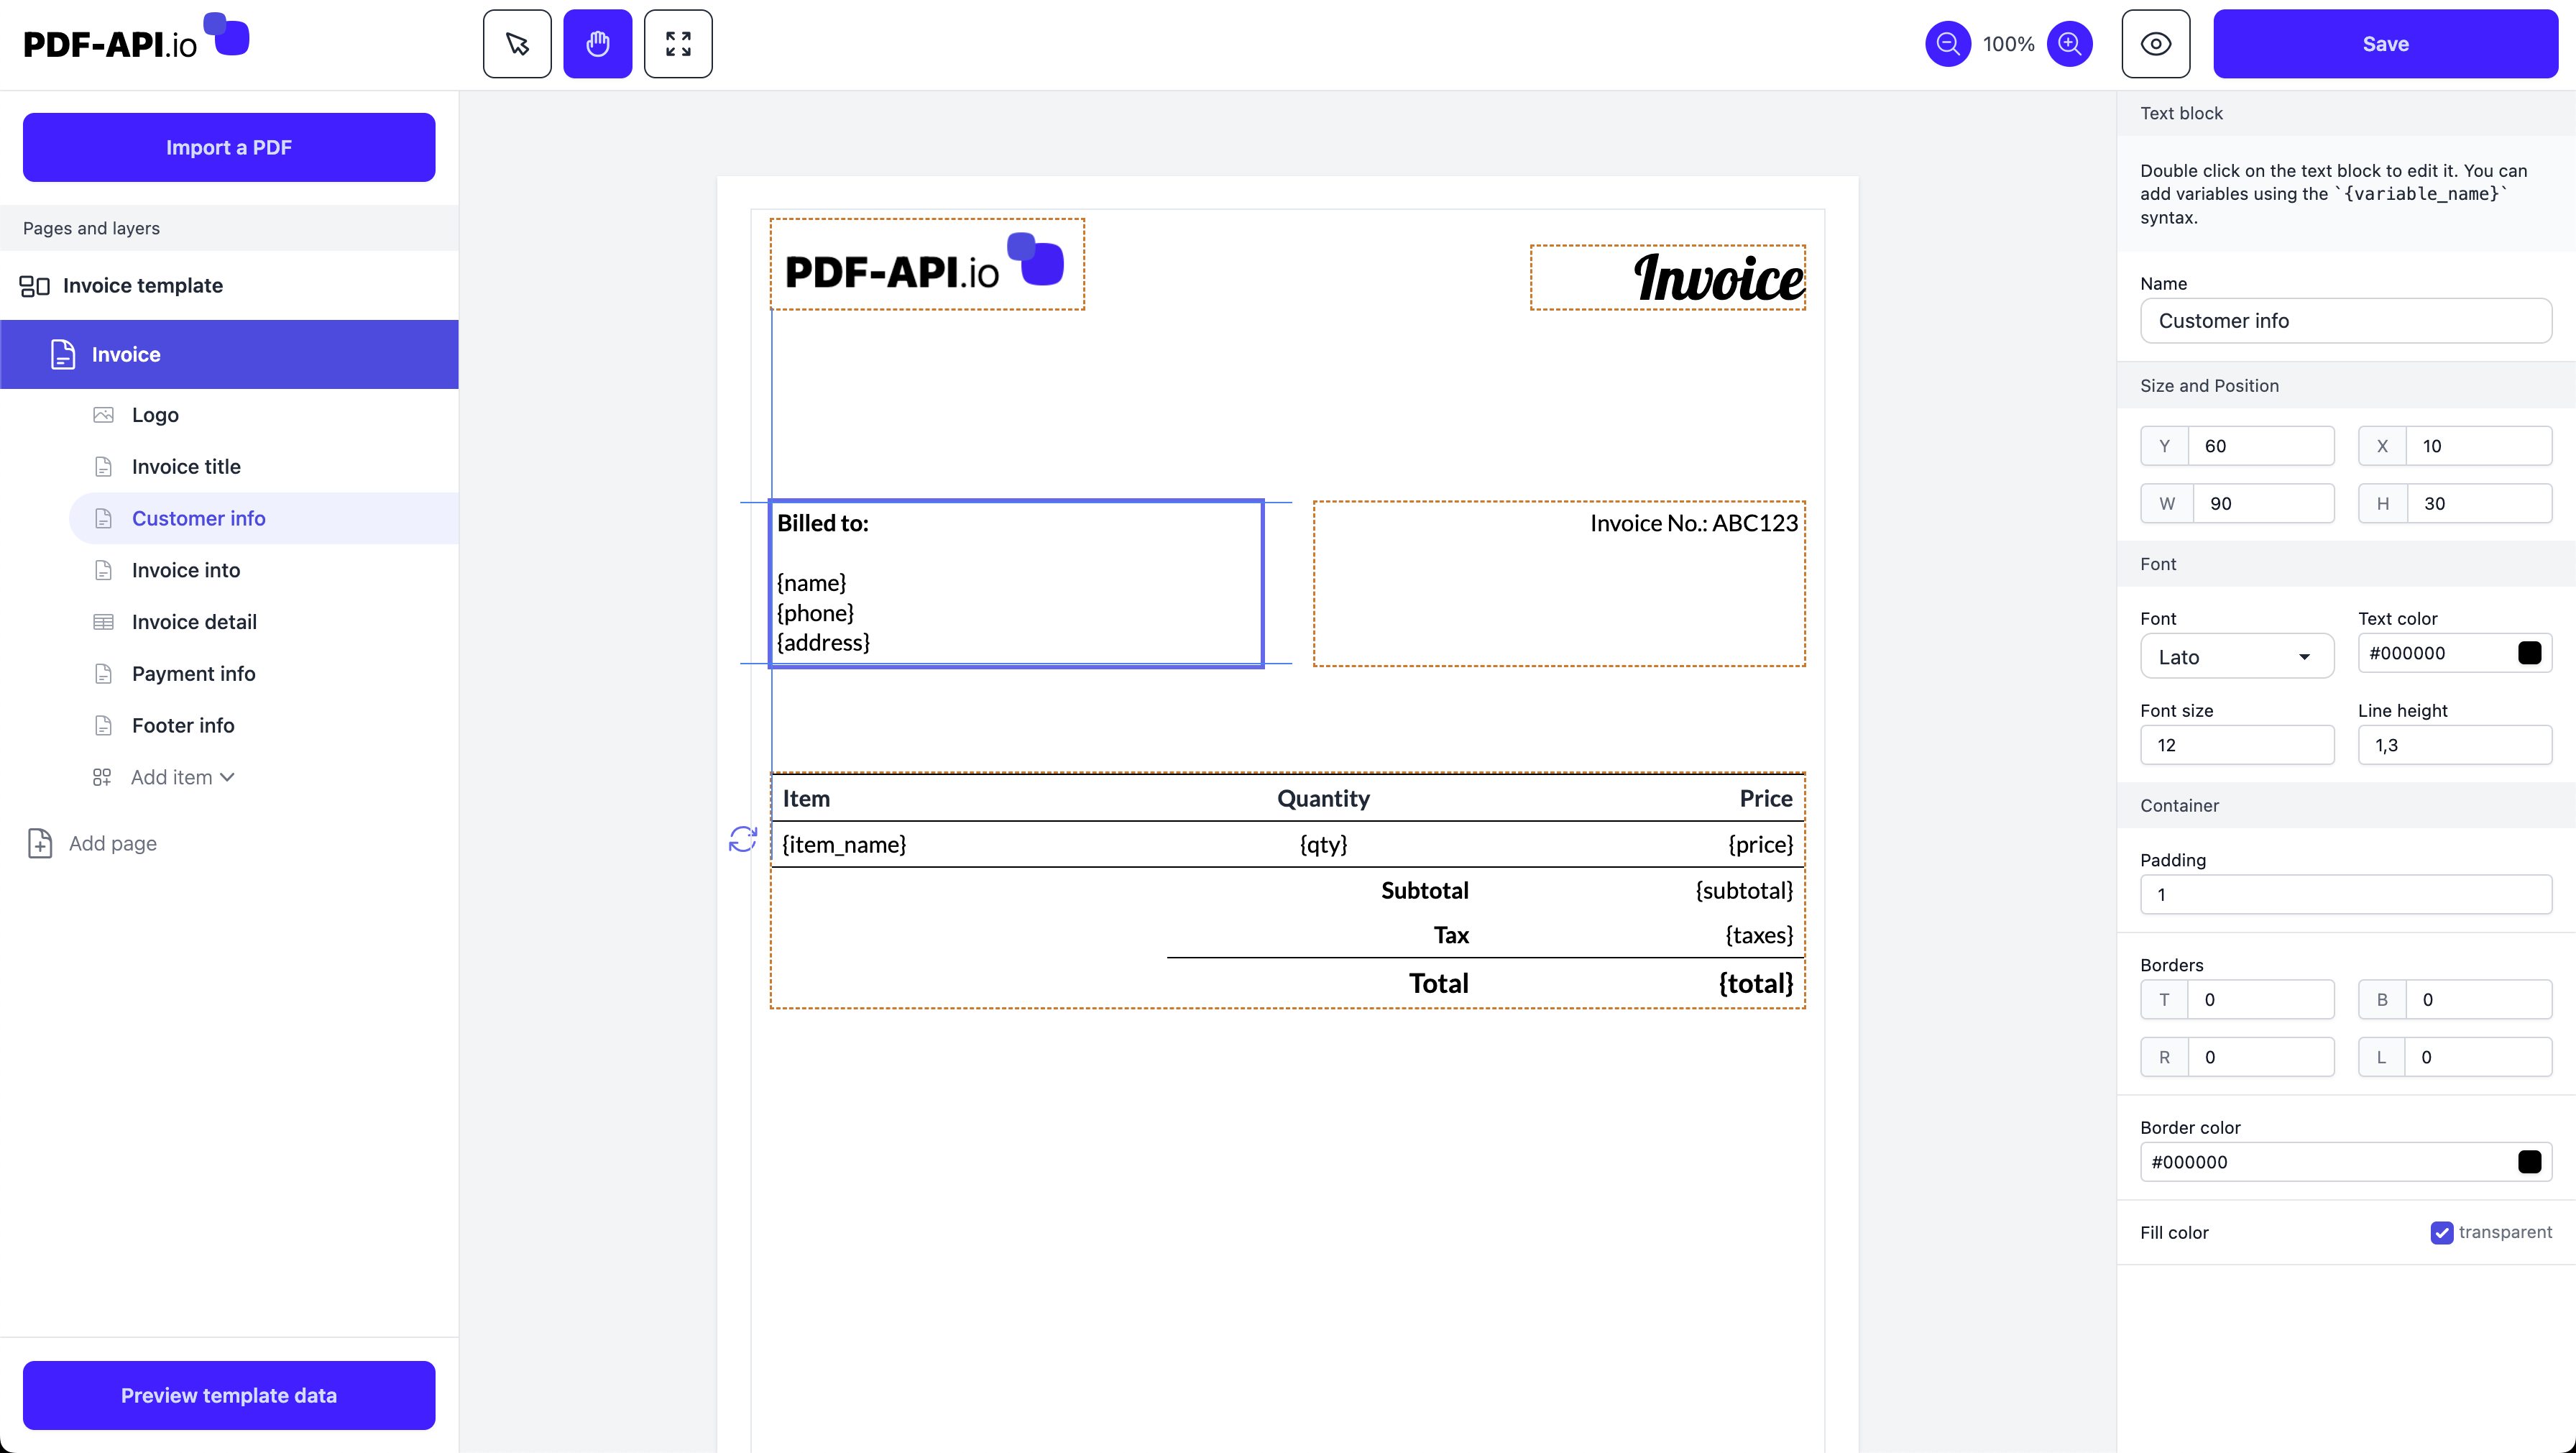 PDF-API.io PDF template editor